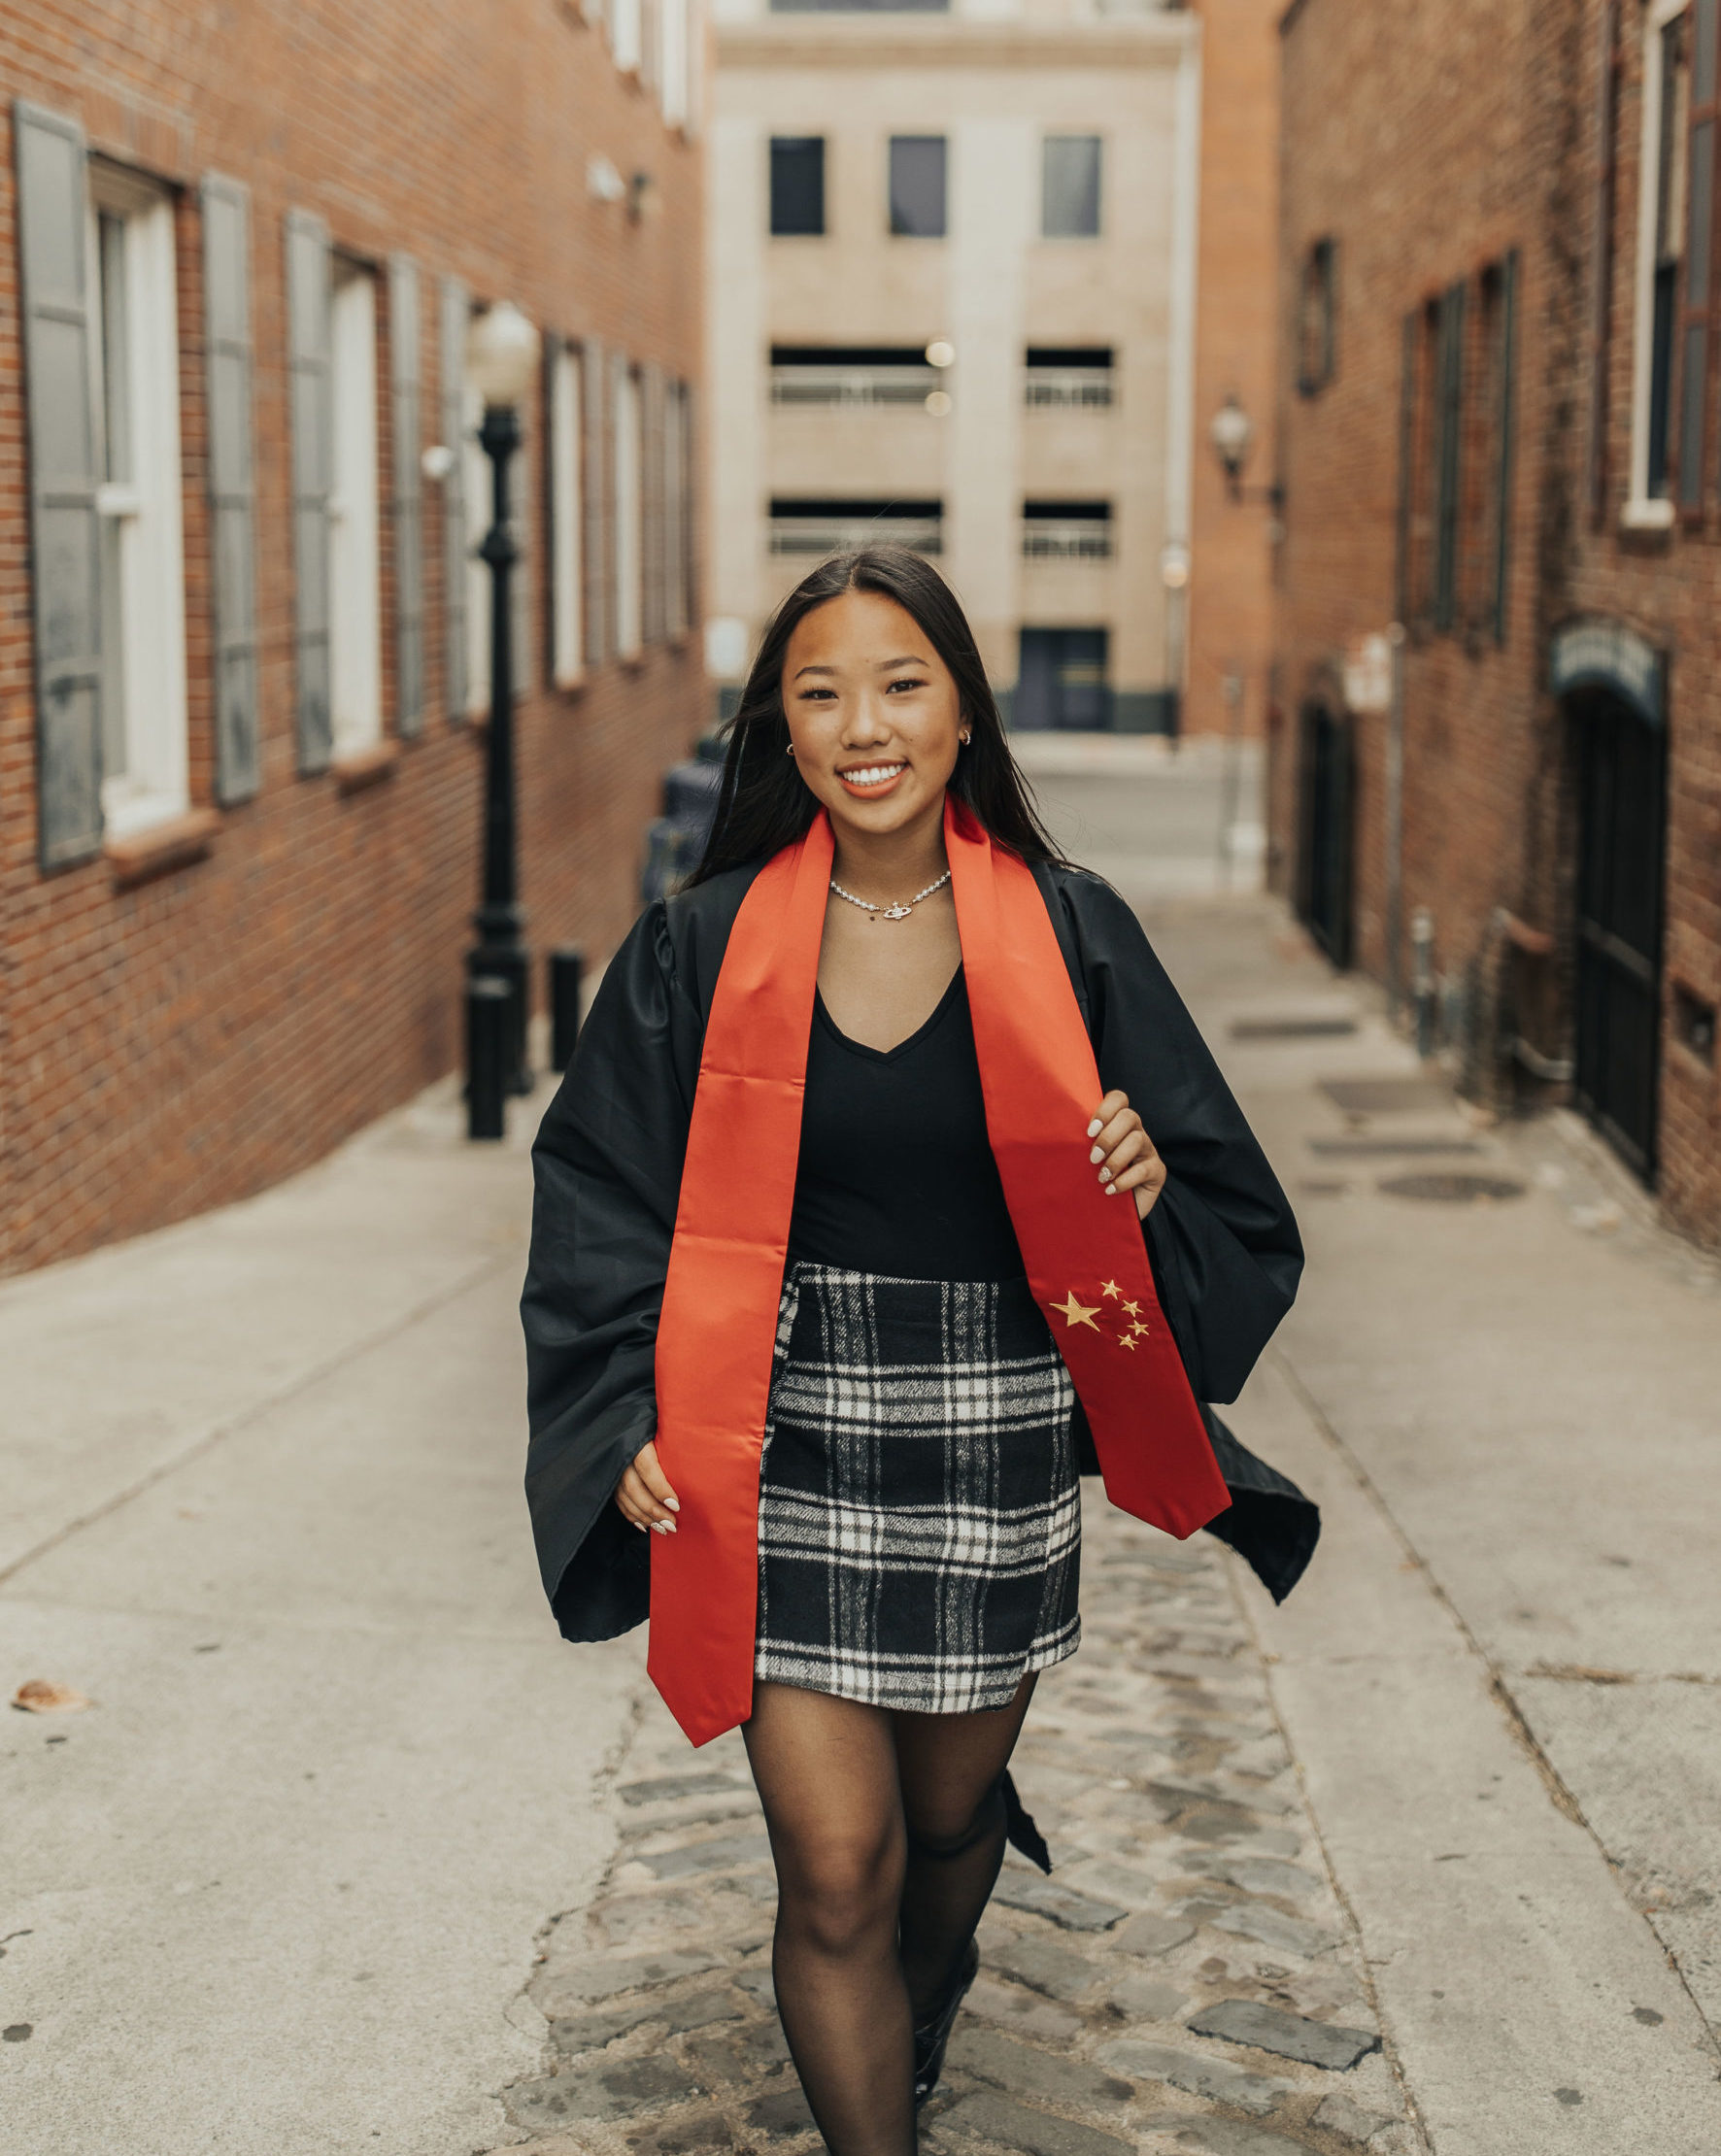 smiling girl walking down alleyway wearing red sash printed like chinese flag